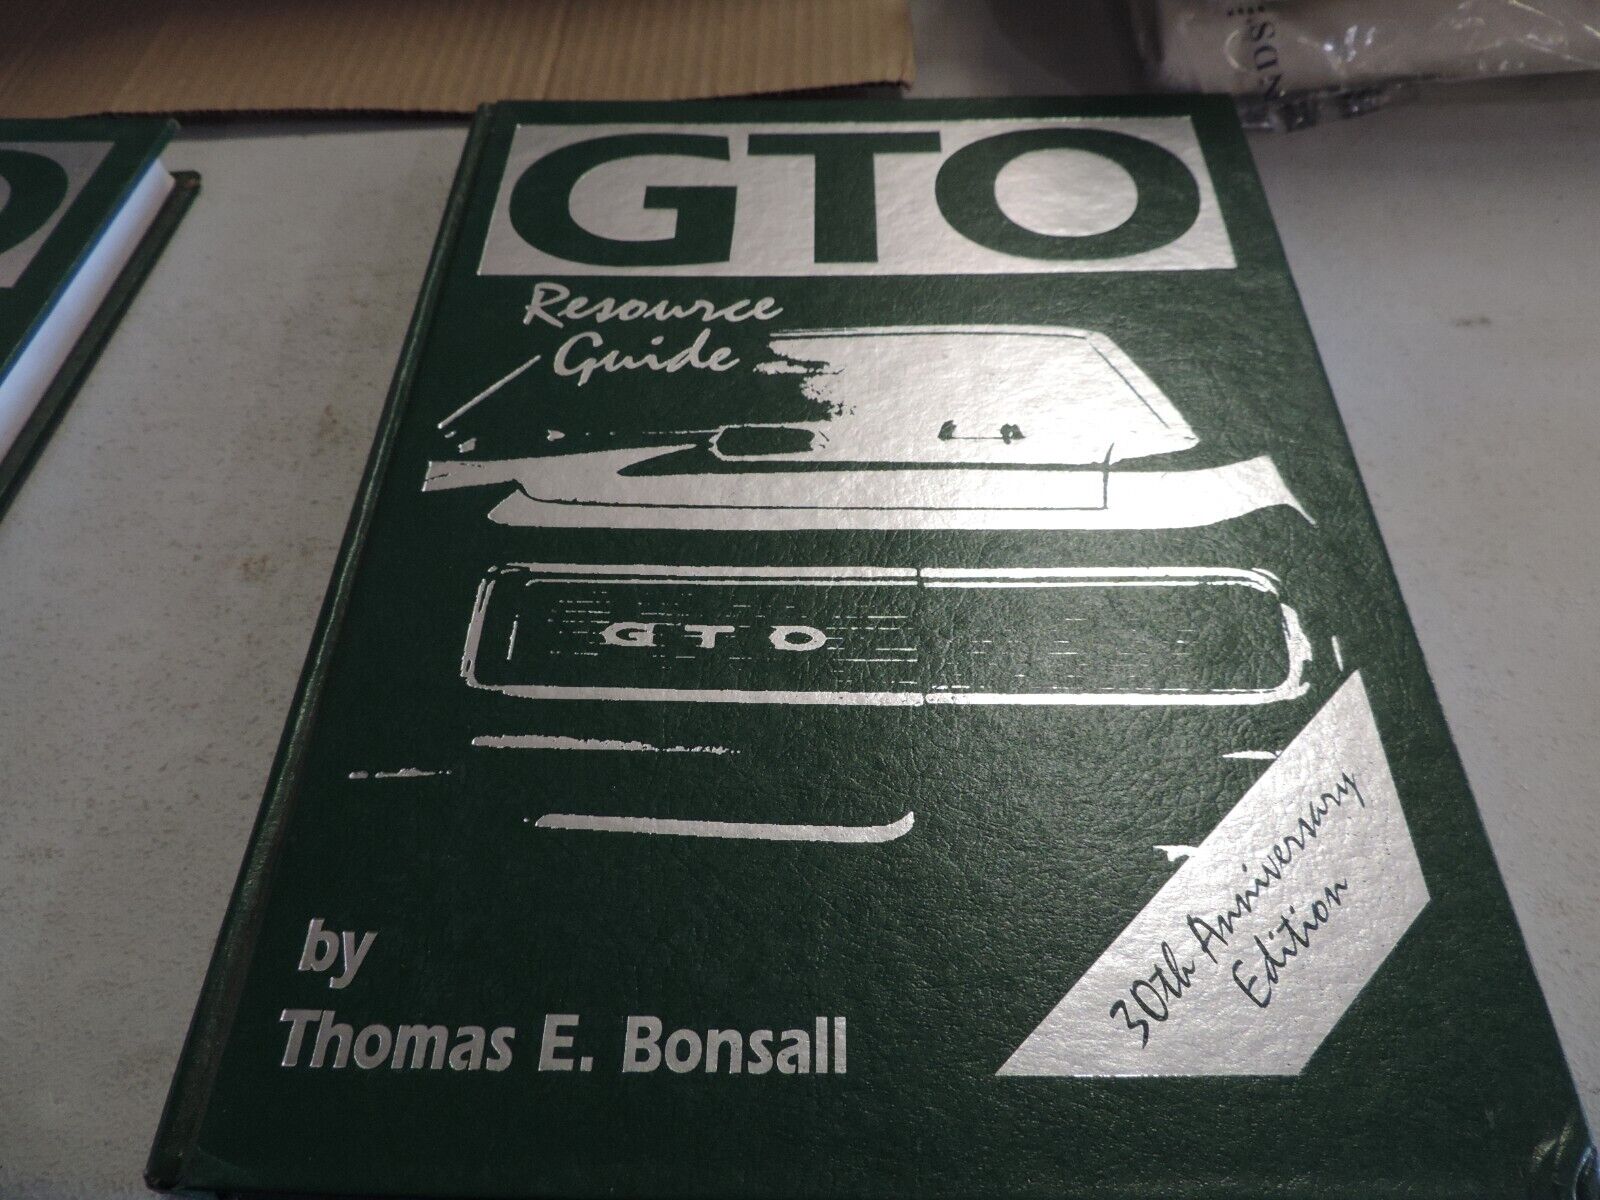 gto resource guide 30th anniversary edition by Thomas E Bonsall